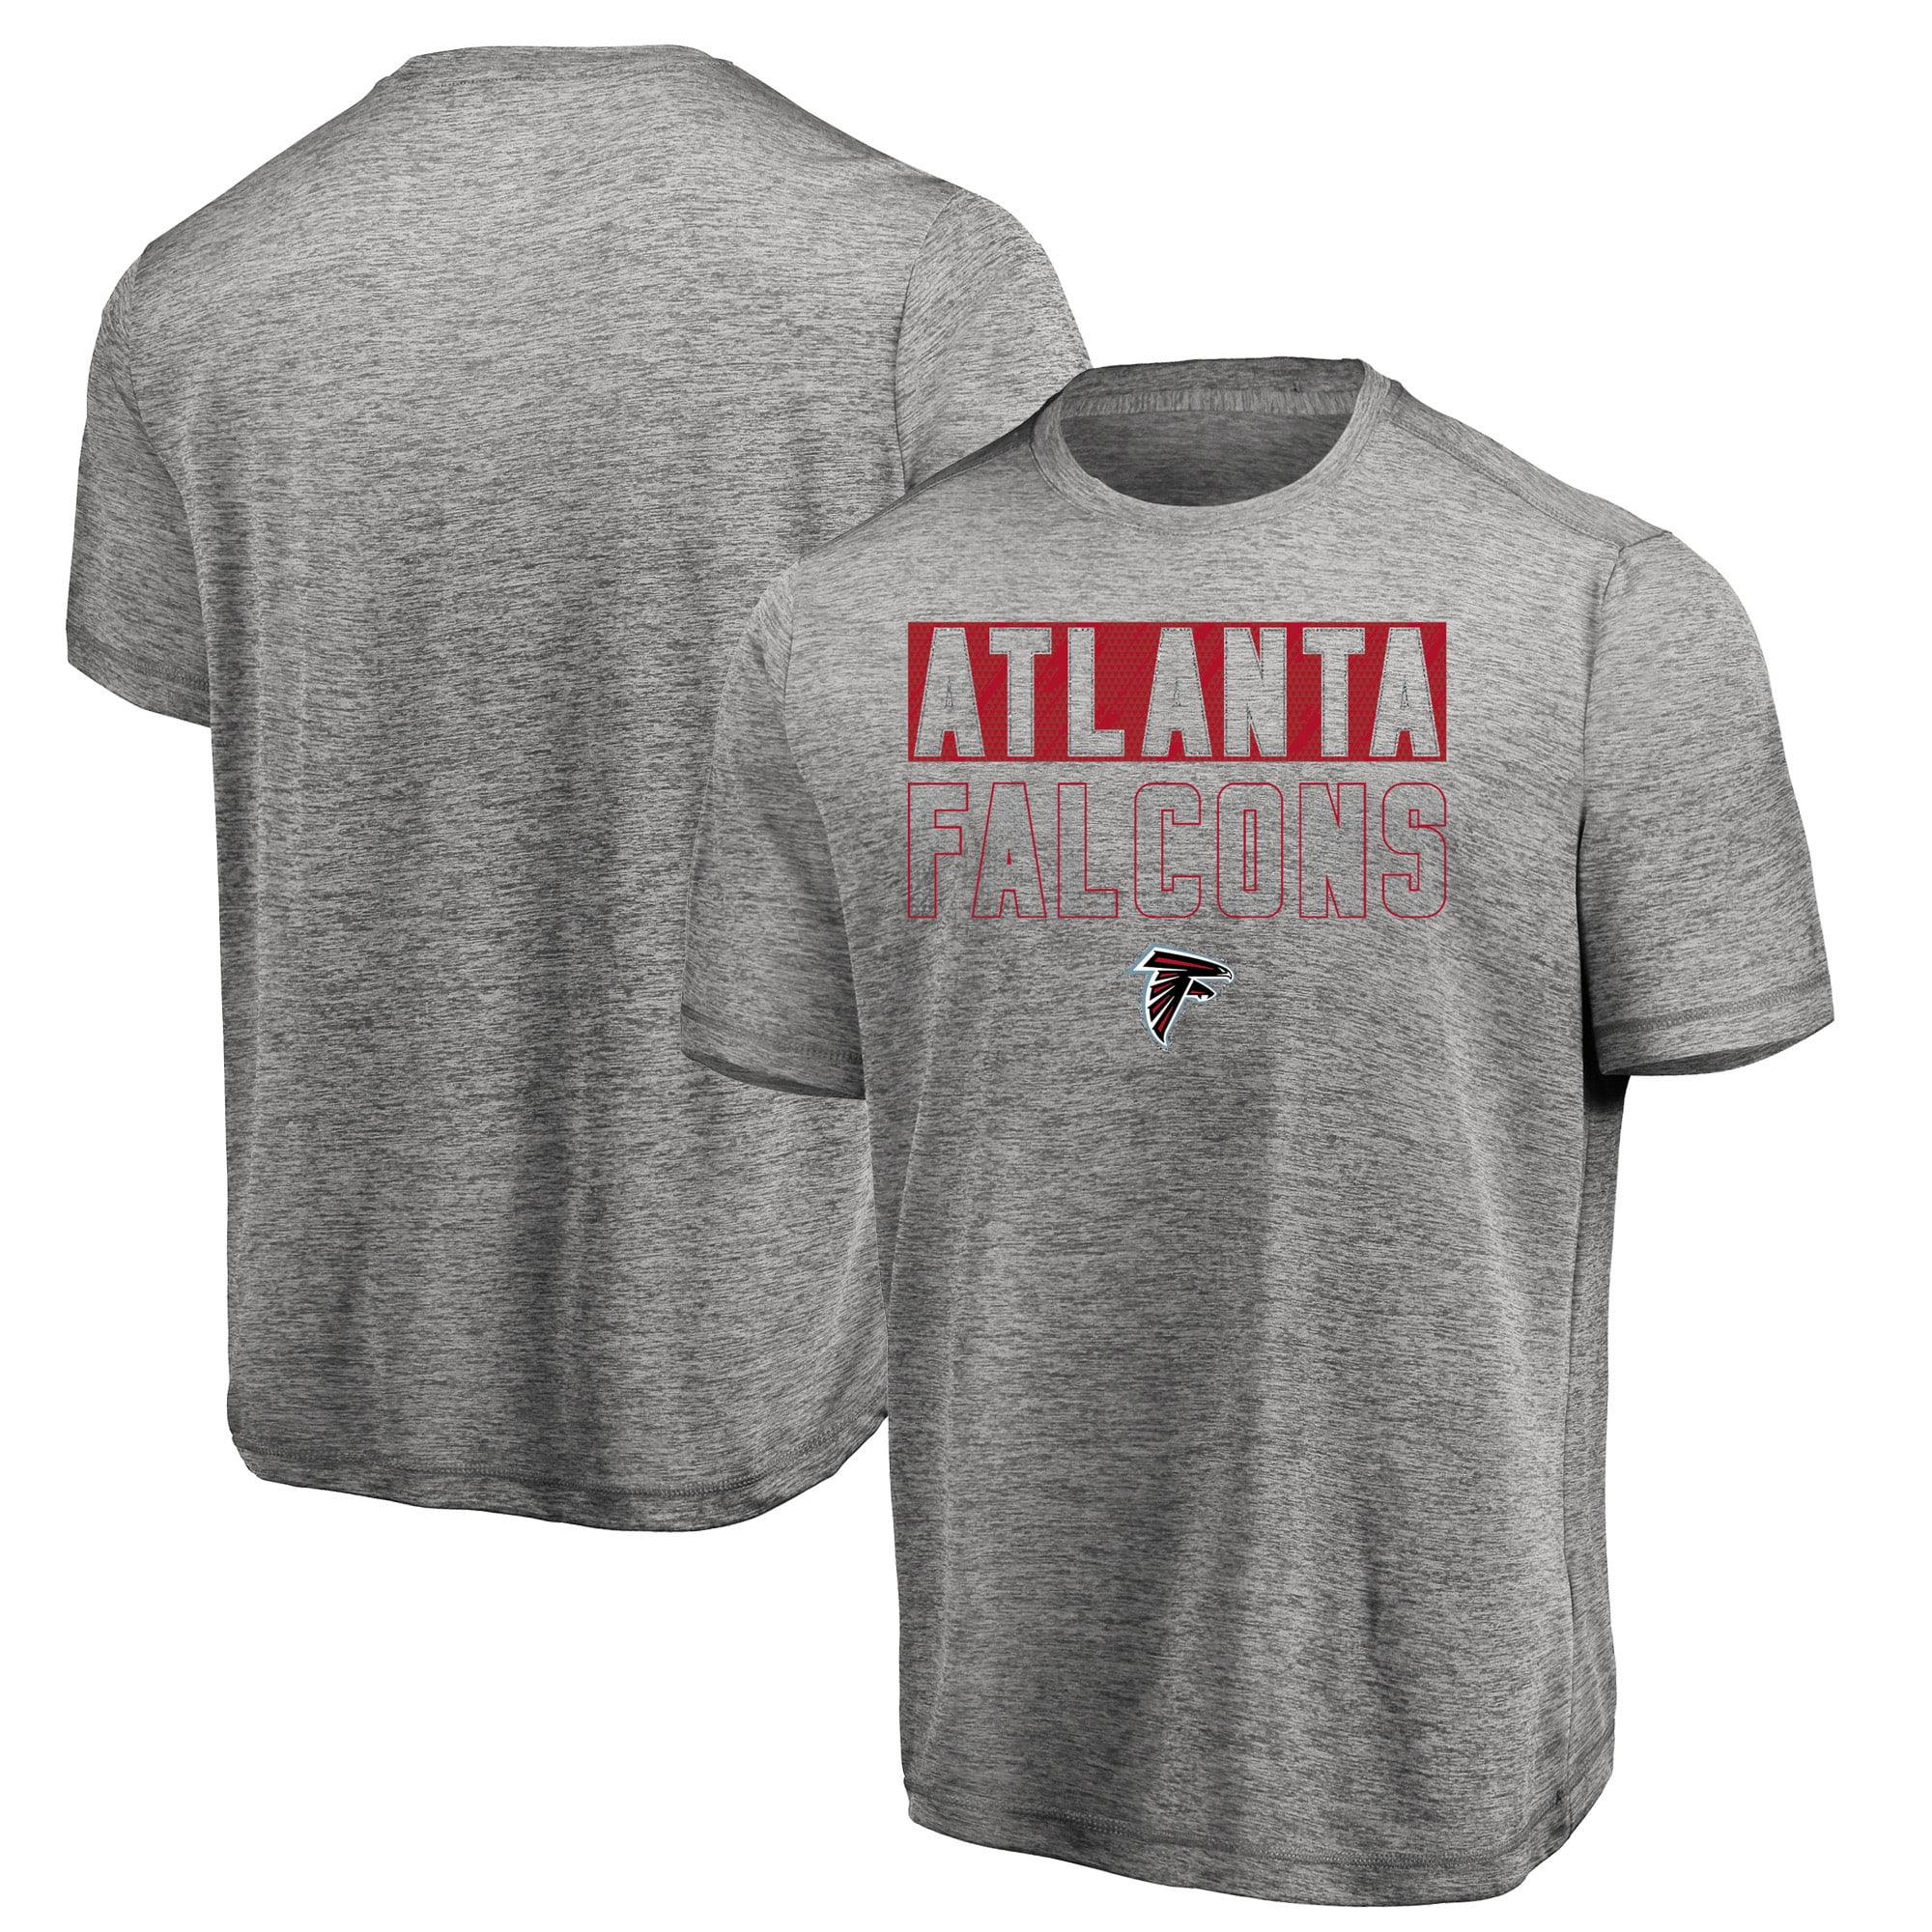 atlanta falcons shirts for sale